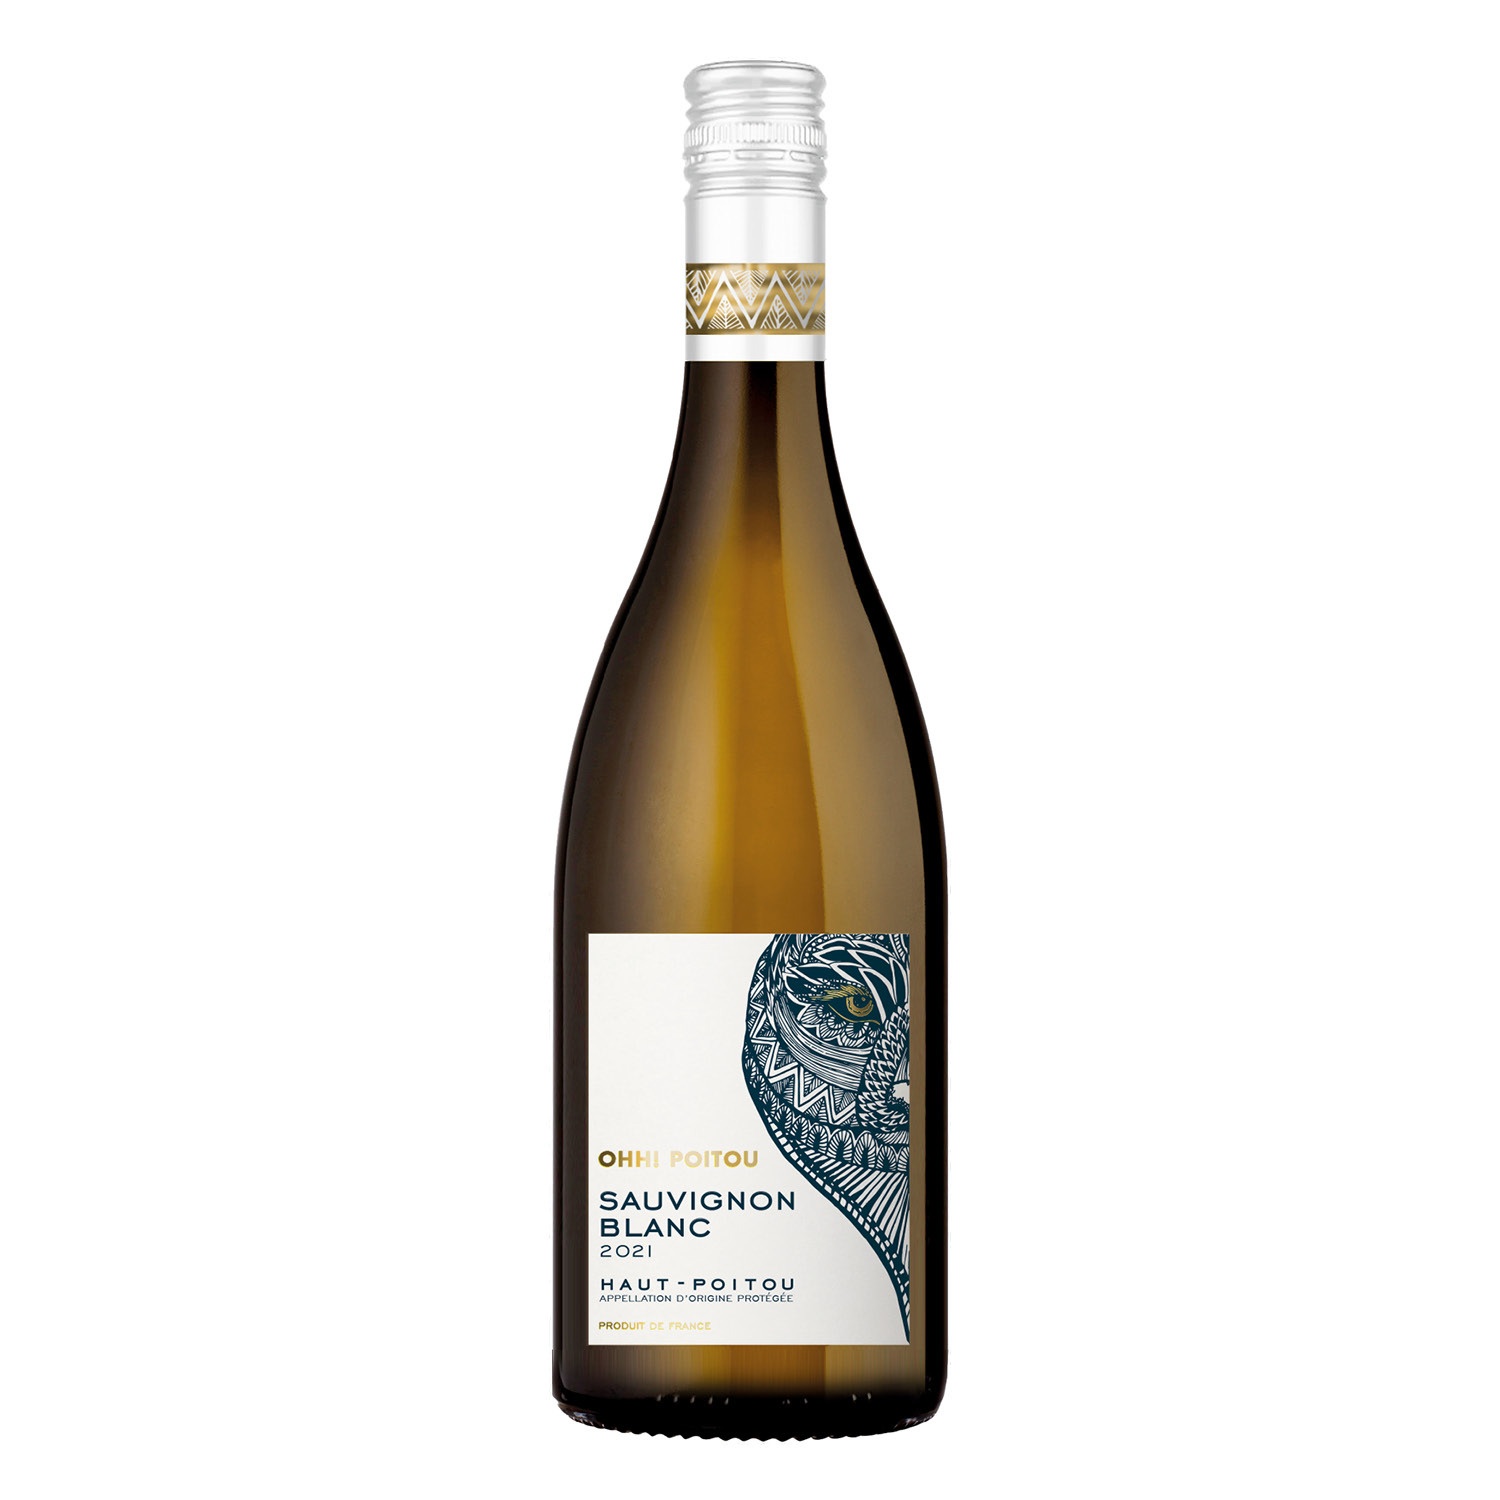 2020/2021 OHH! Poitou Sauvignon Blanc AOP 0,75 l